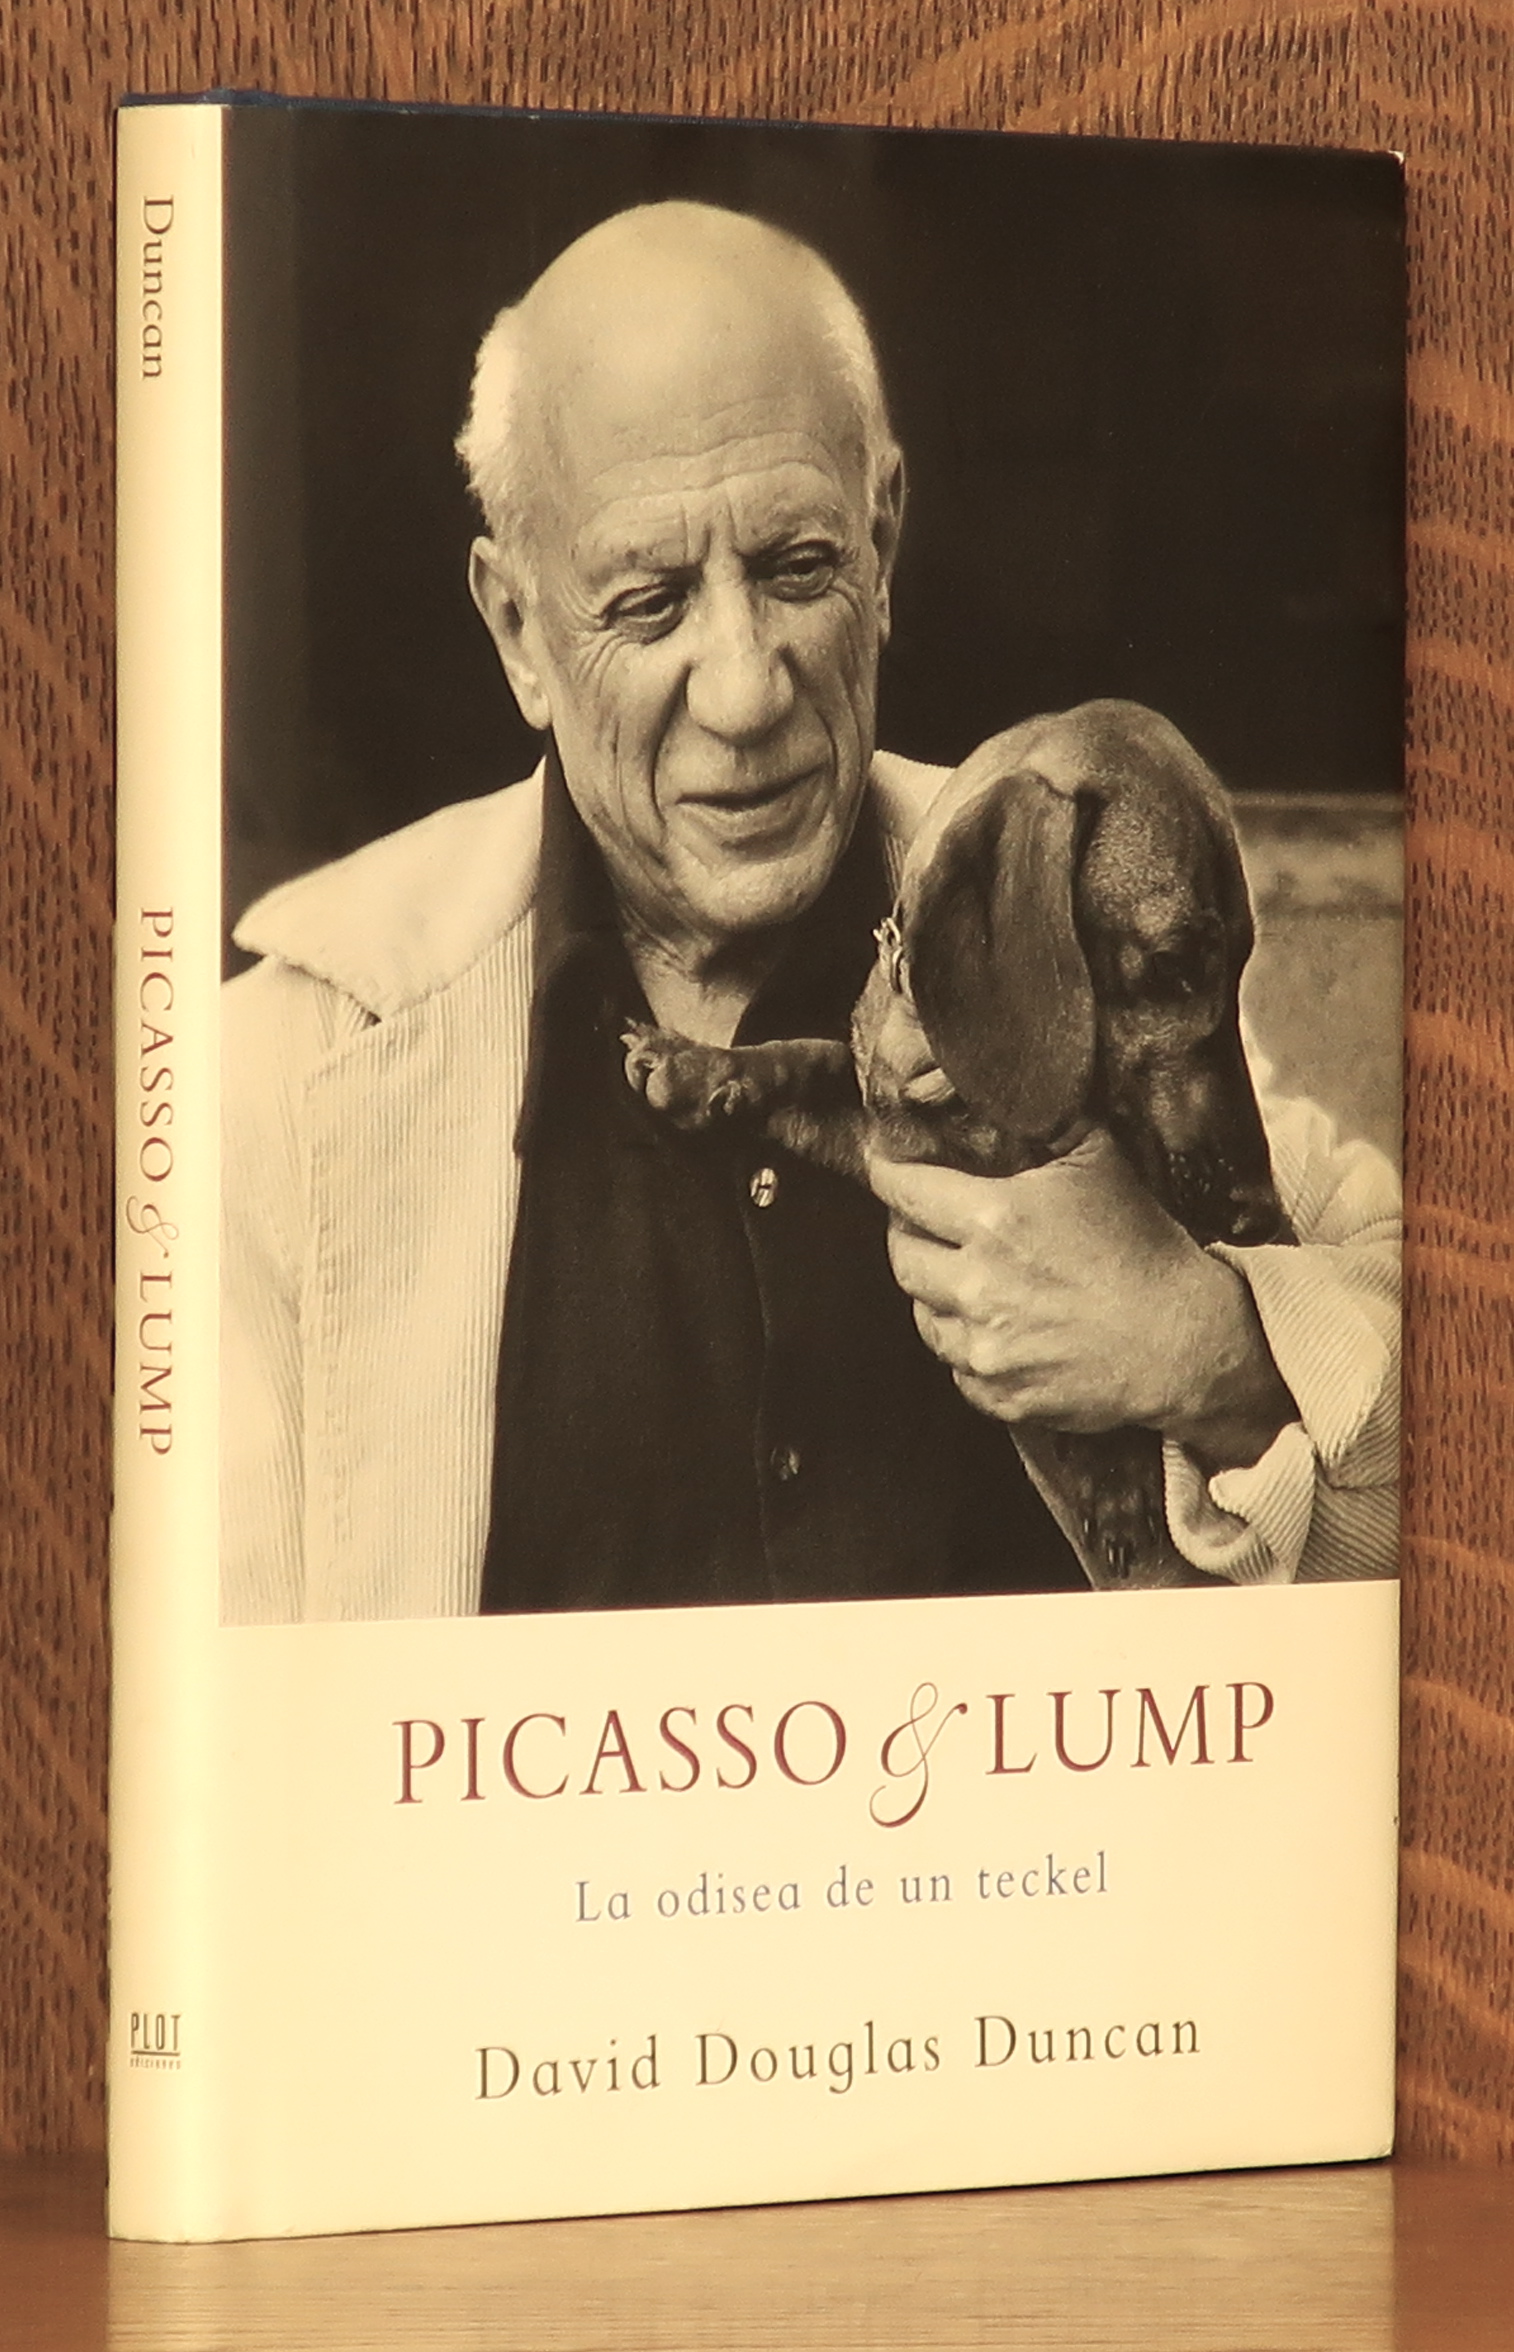 Picasso & Lump - La Odisea de un Teckel - David Douglas Duncan, foreword by Paloma Picasso Thevenet